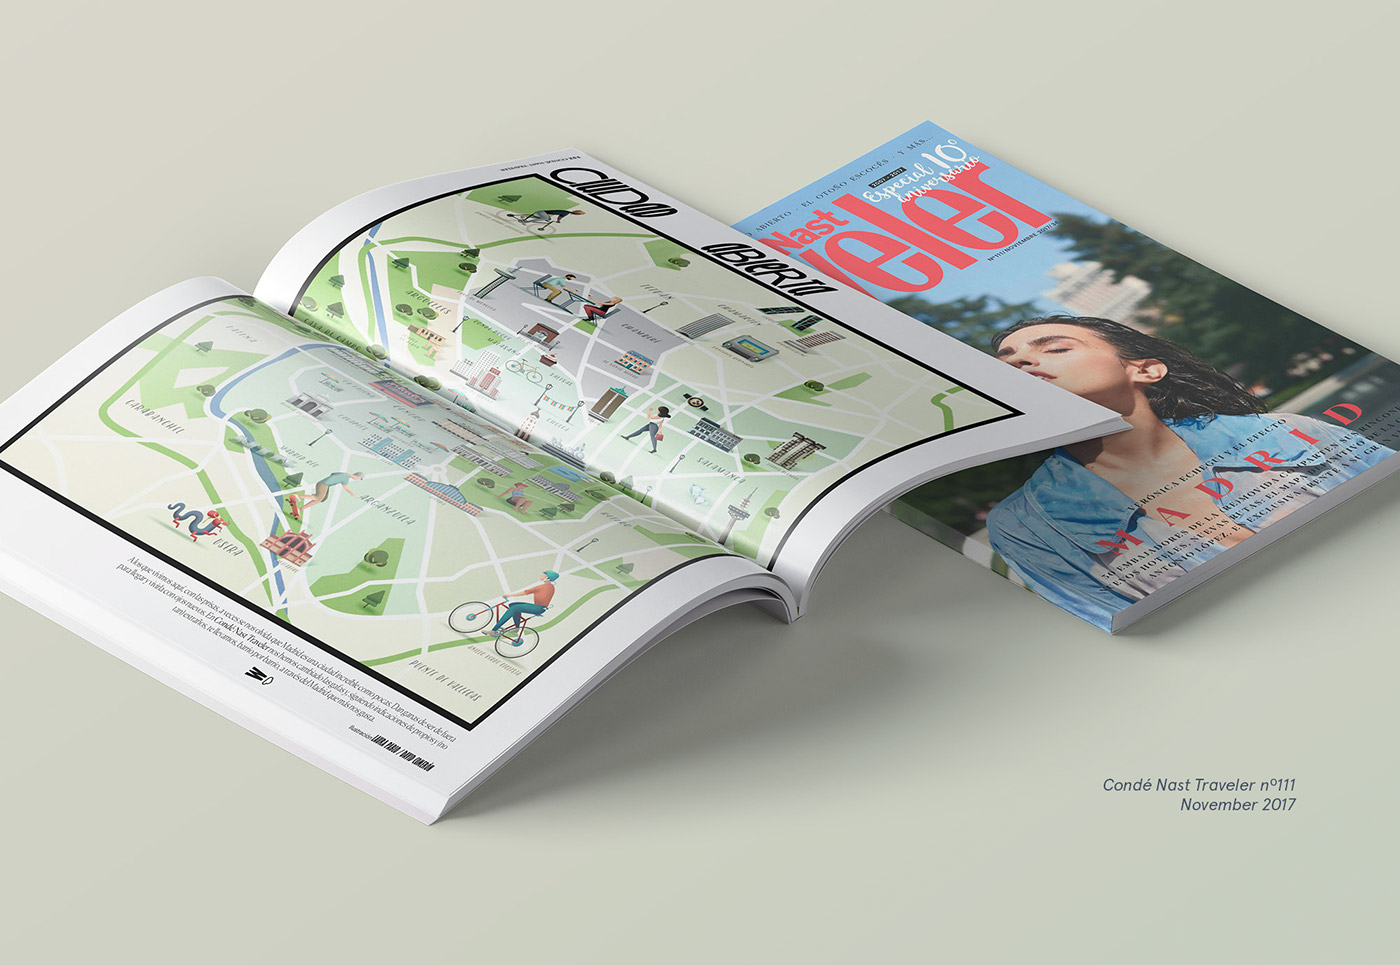 map madrid building city tourism traveler magazine editorial spain Landmarks